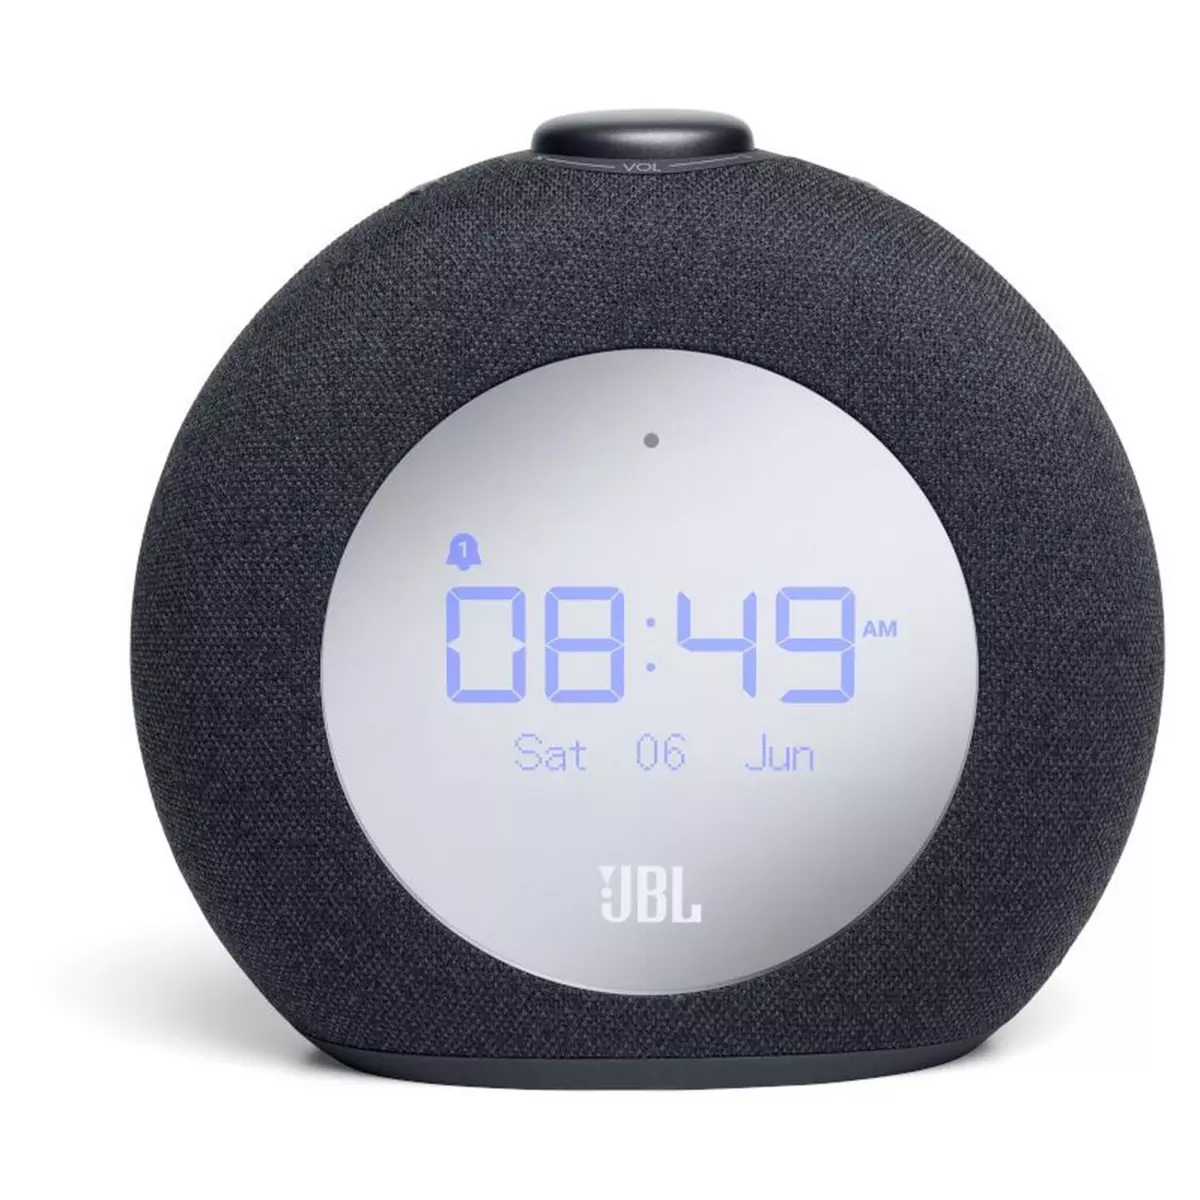 JBL Enceinte radio réveil Bluetooth - Horizon2 DAB - Noir pas cher 